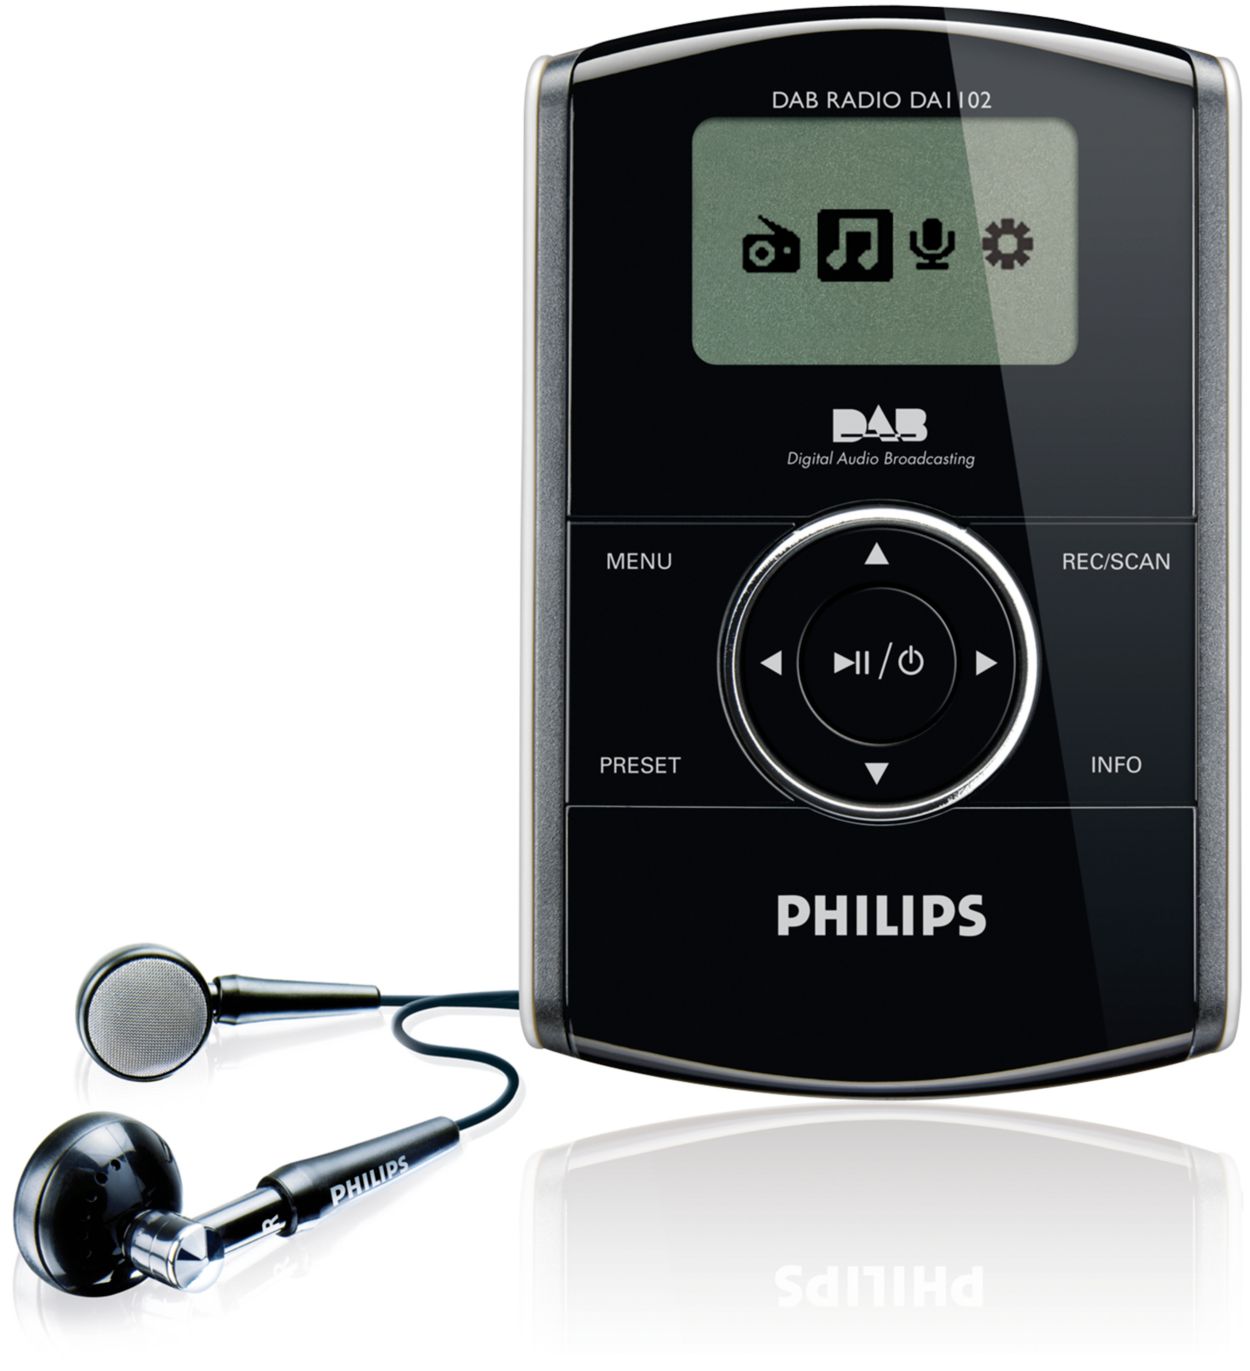 Distributie Modernisering terras Portable Radio DA1102/05 | Philips